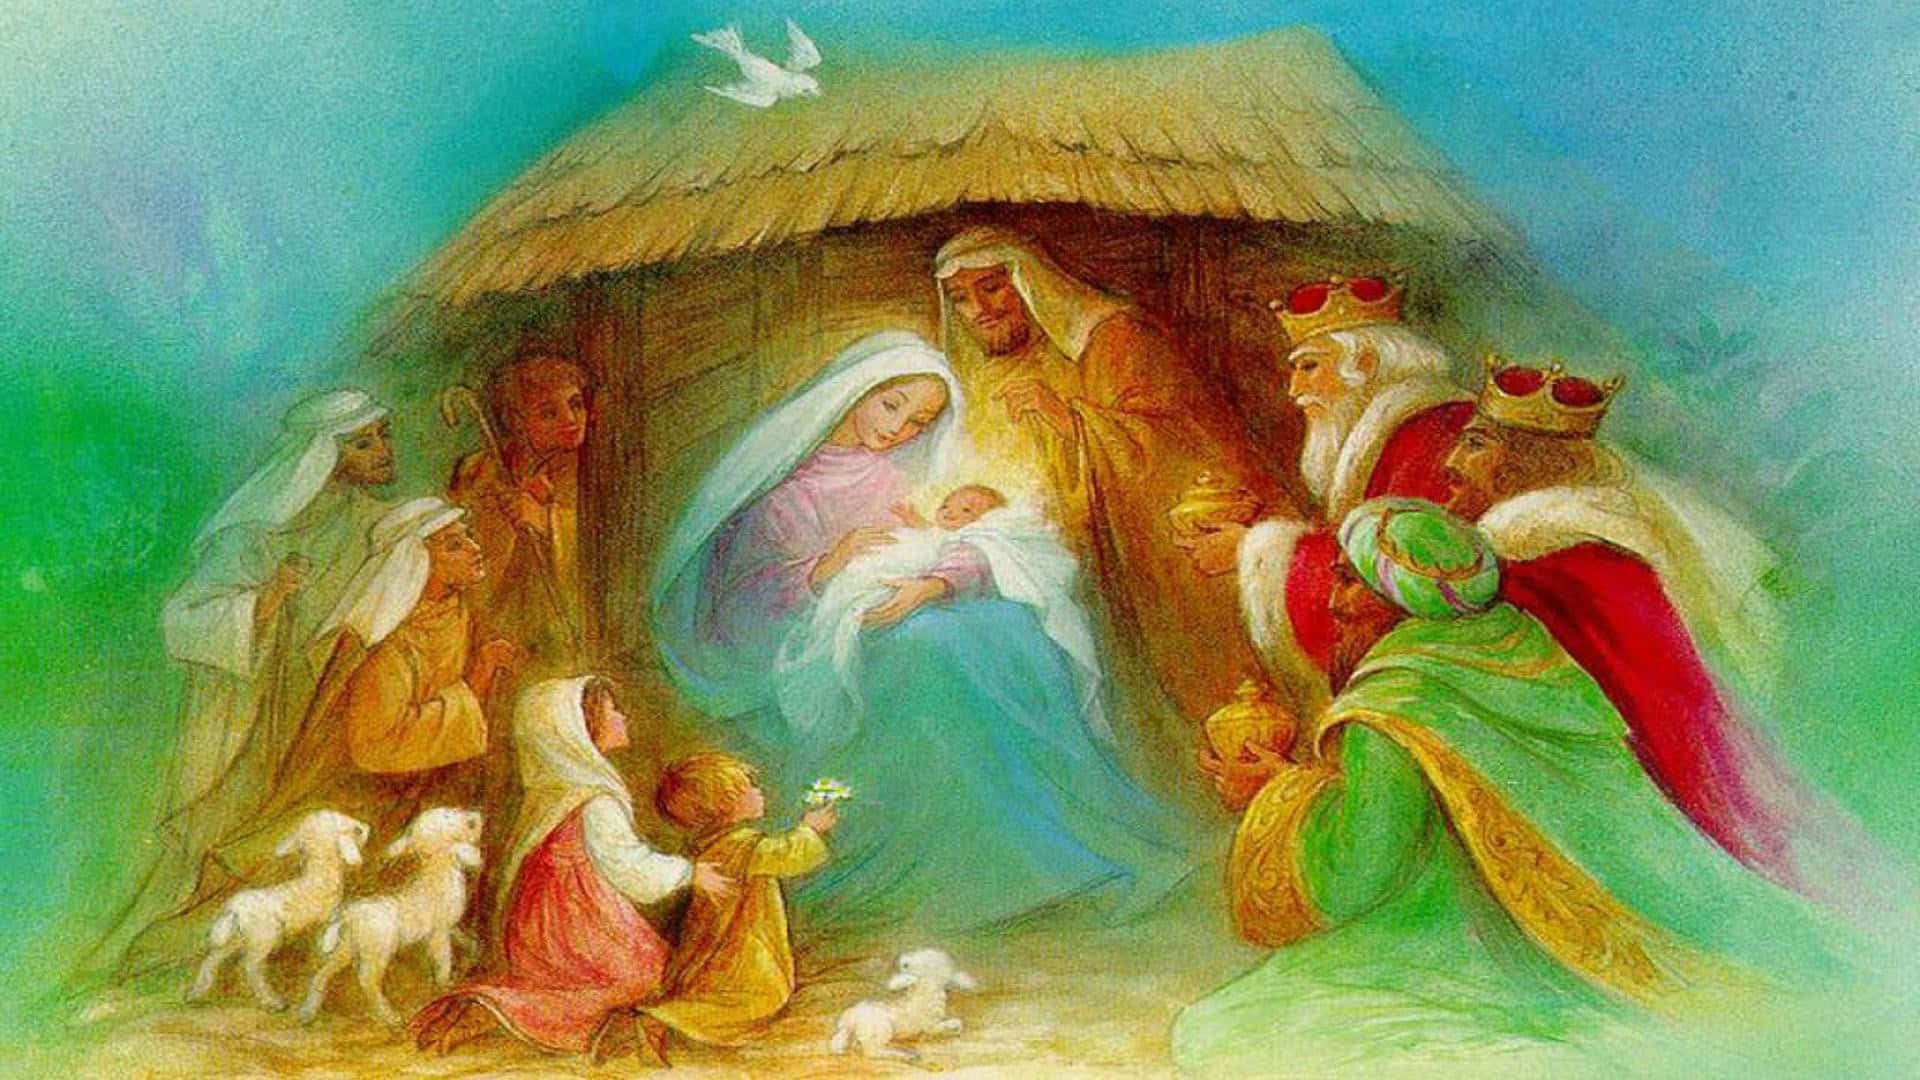 'A traditional Nativity scene depicting the birth of Jesus in Bethlehem.'